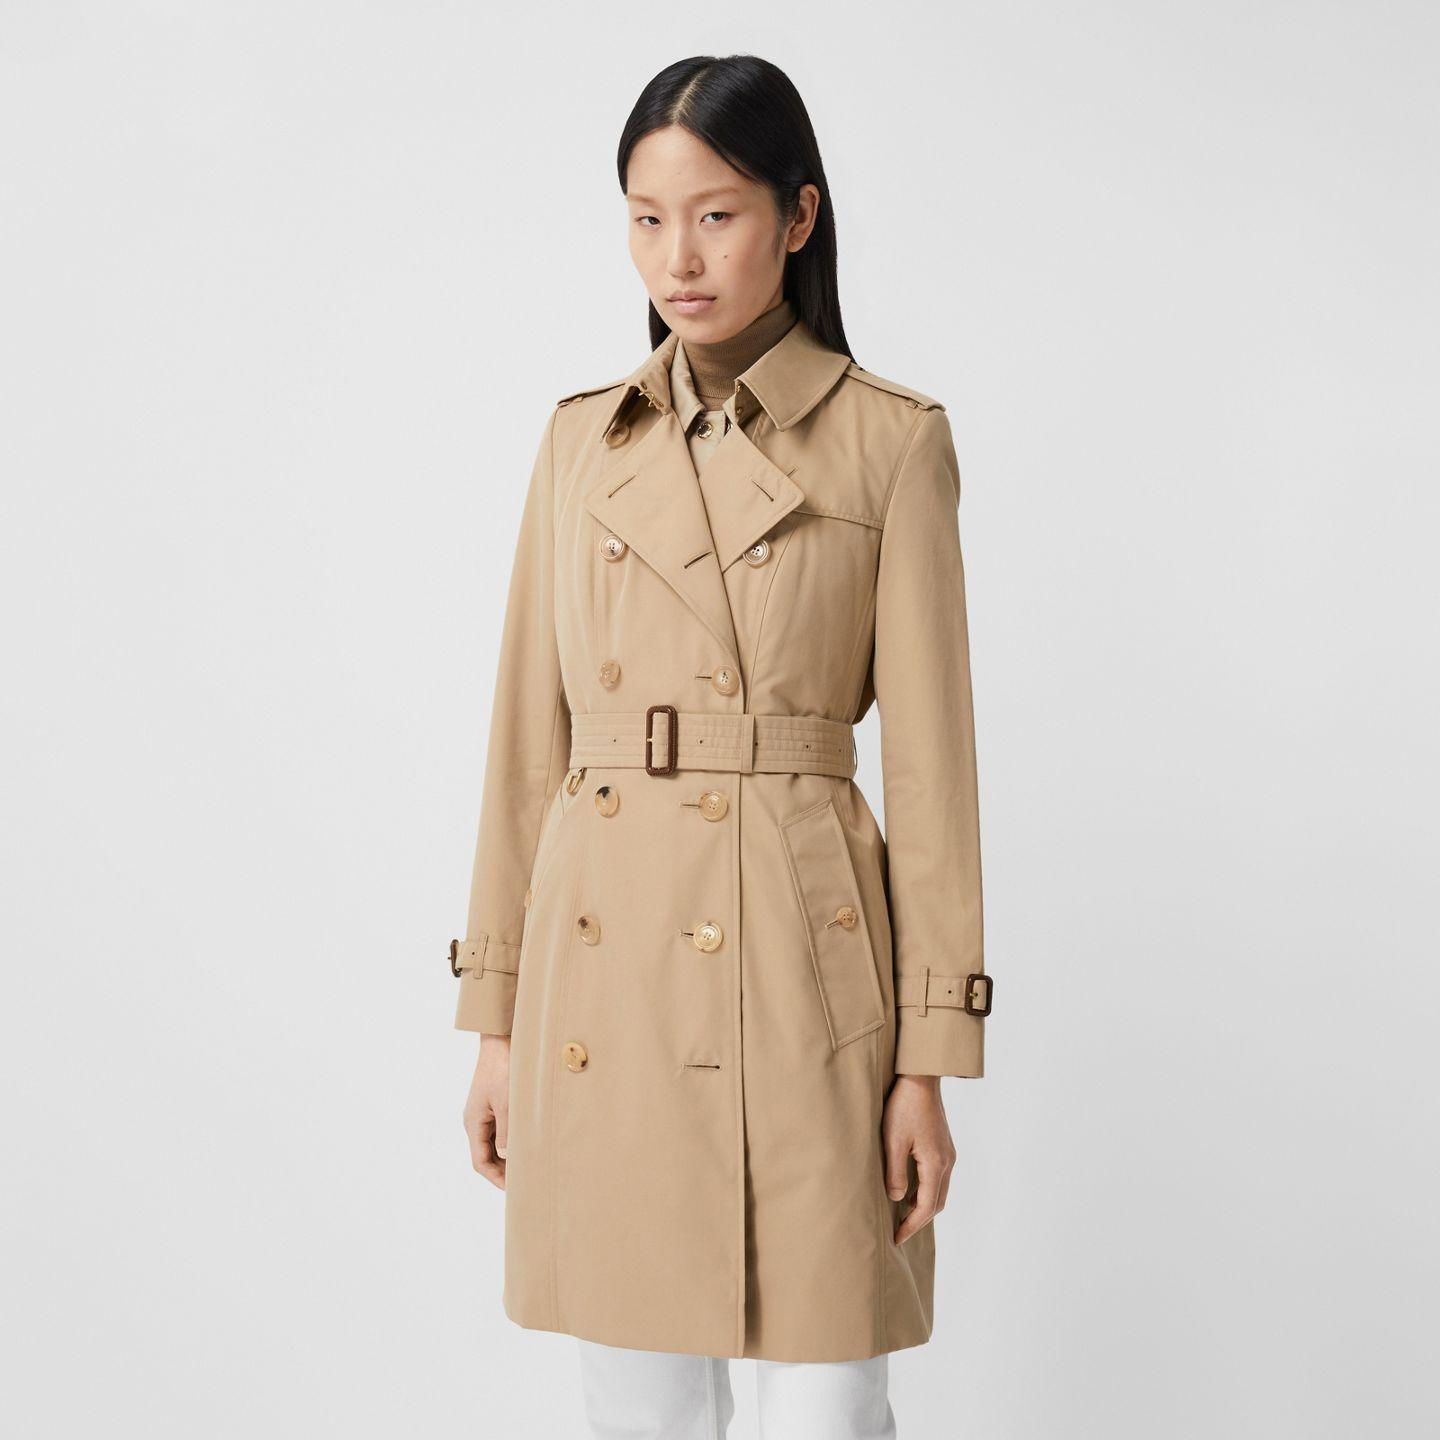          The Mid-length Chelsea Heritage Trench Coat Women cotton rain jacket   5